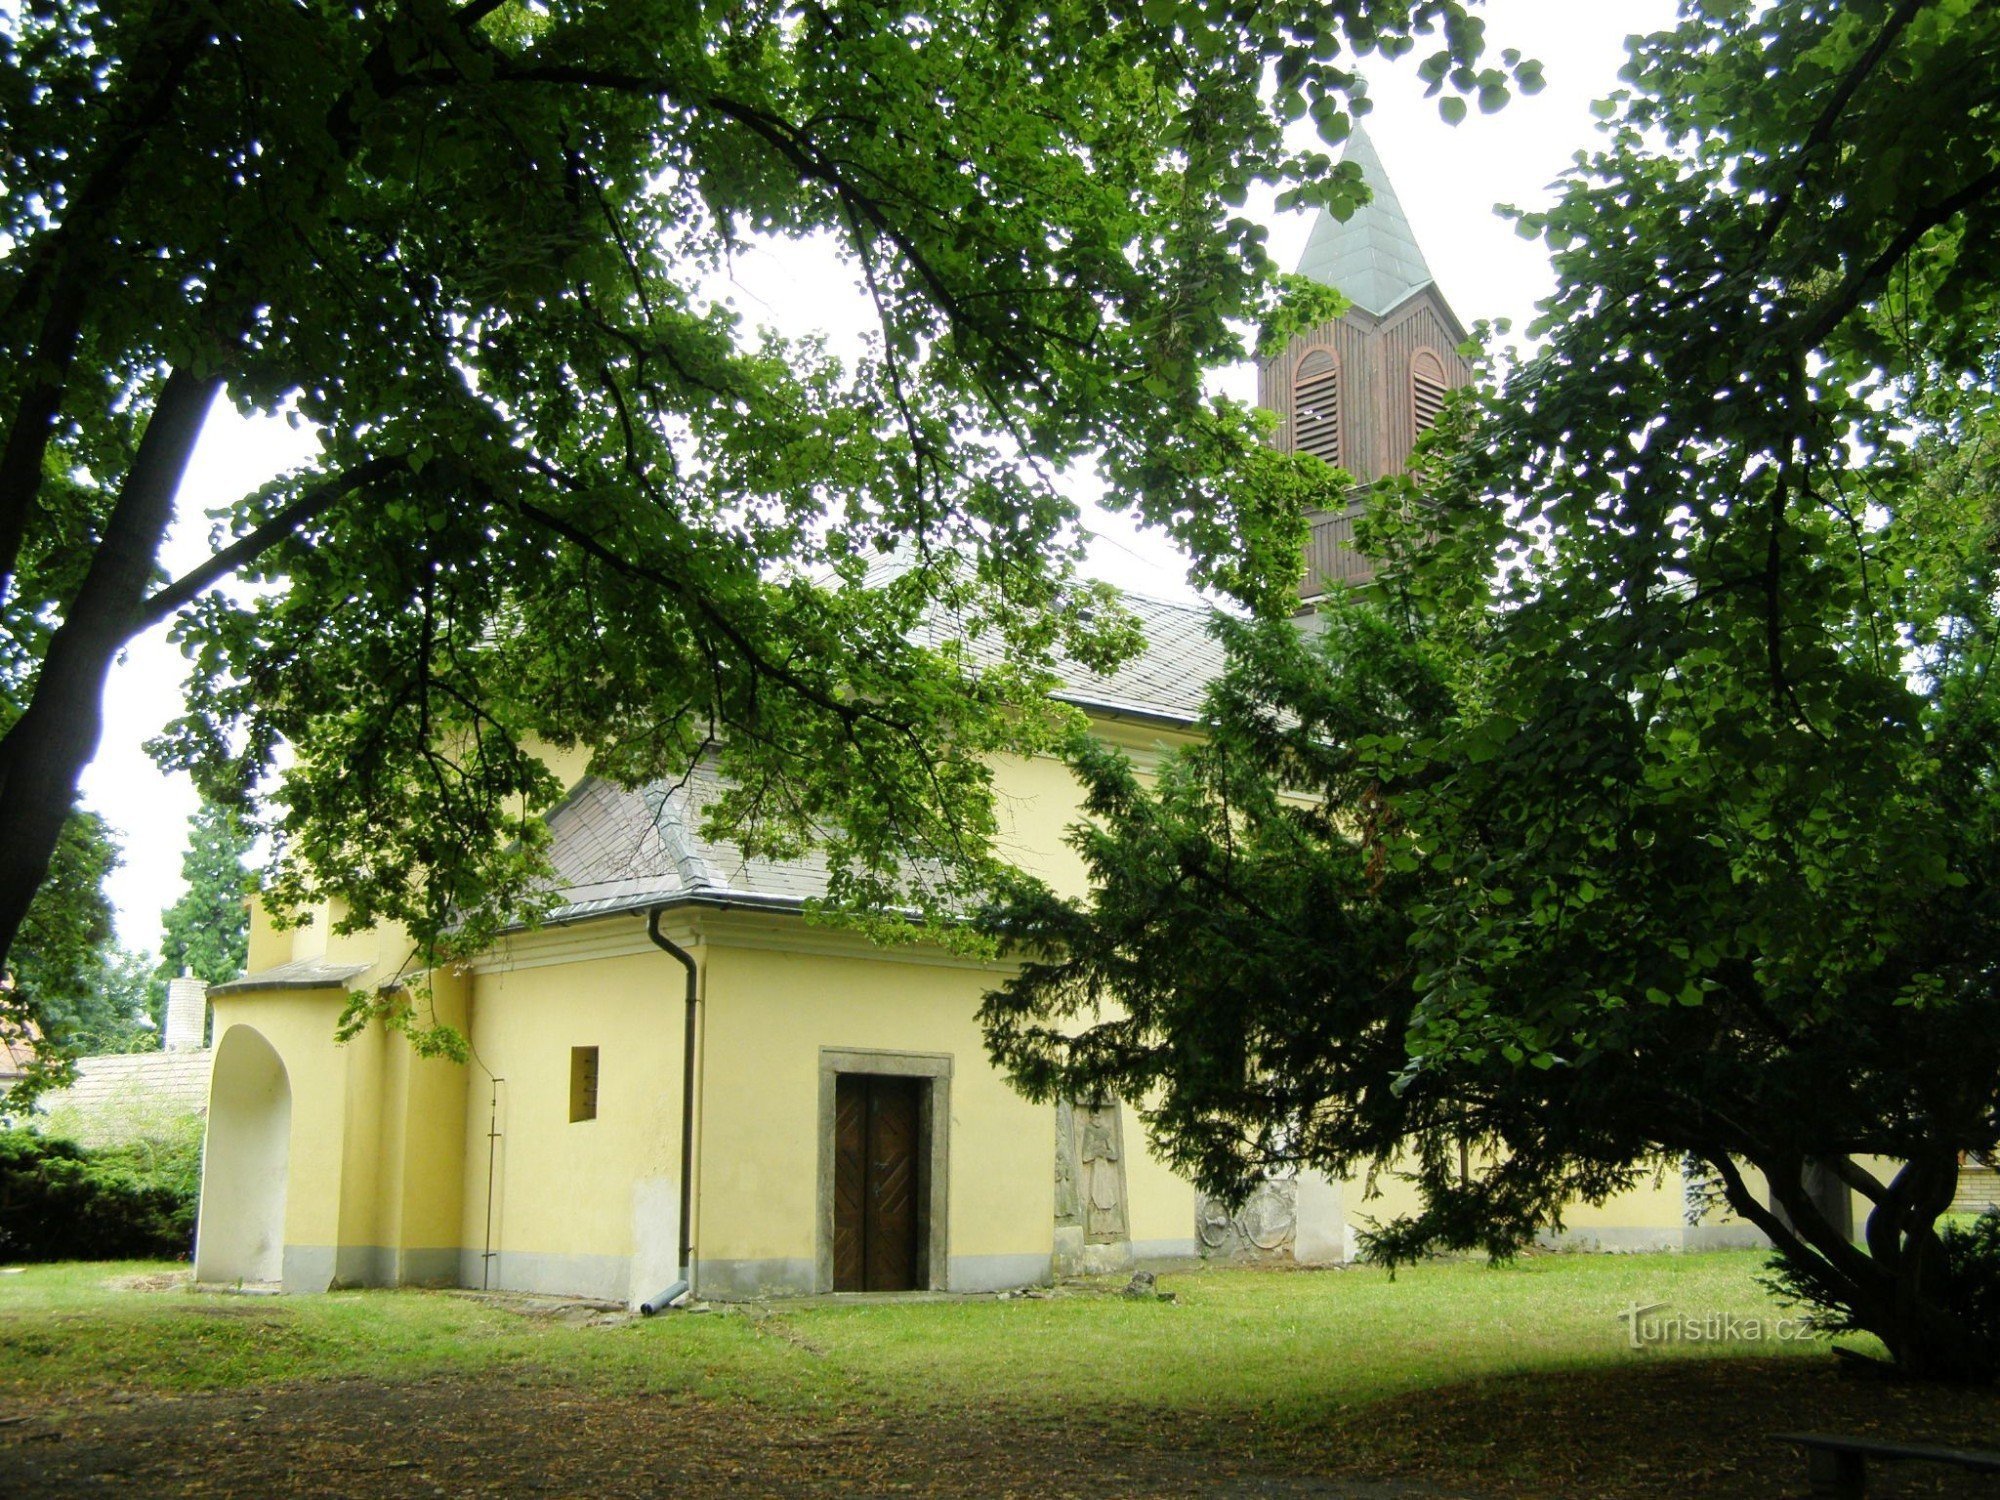 Chlumec nad Cidlinou - Church of the Holy Trinity